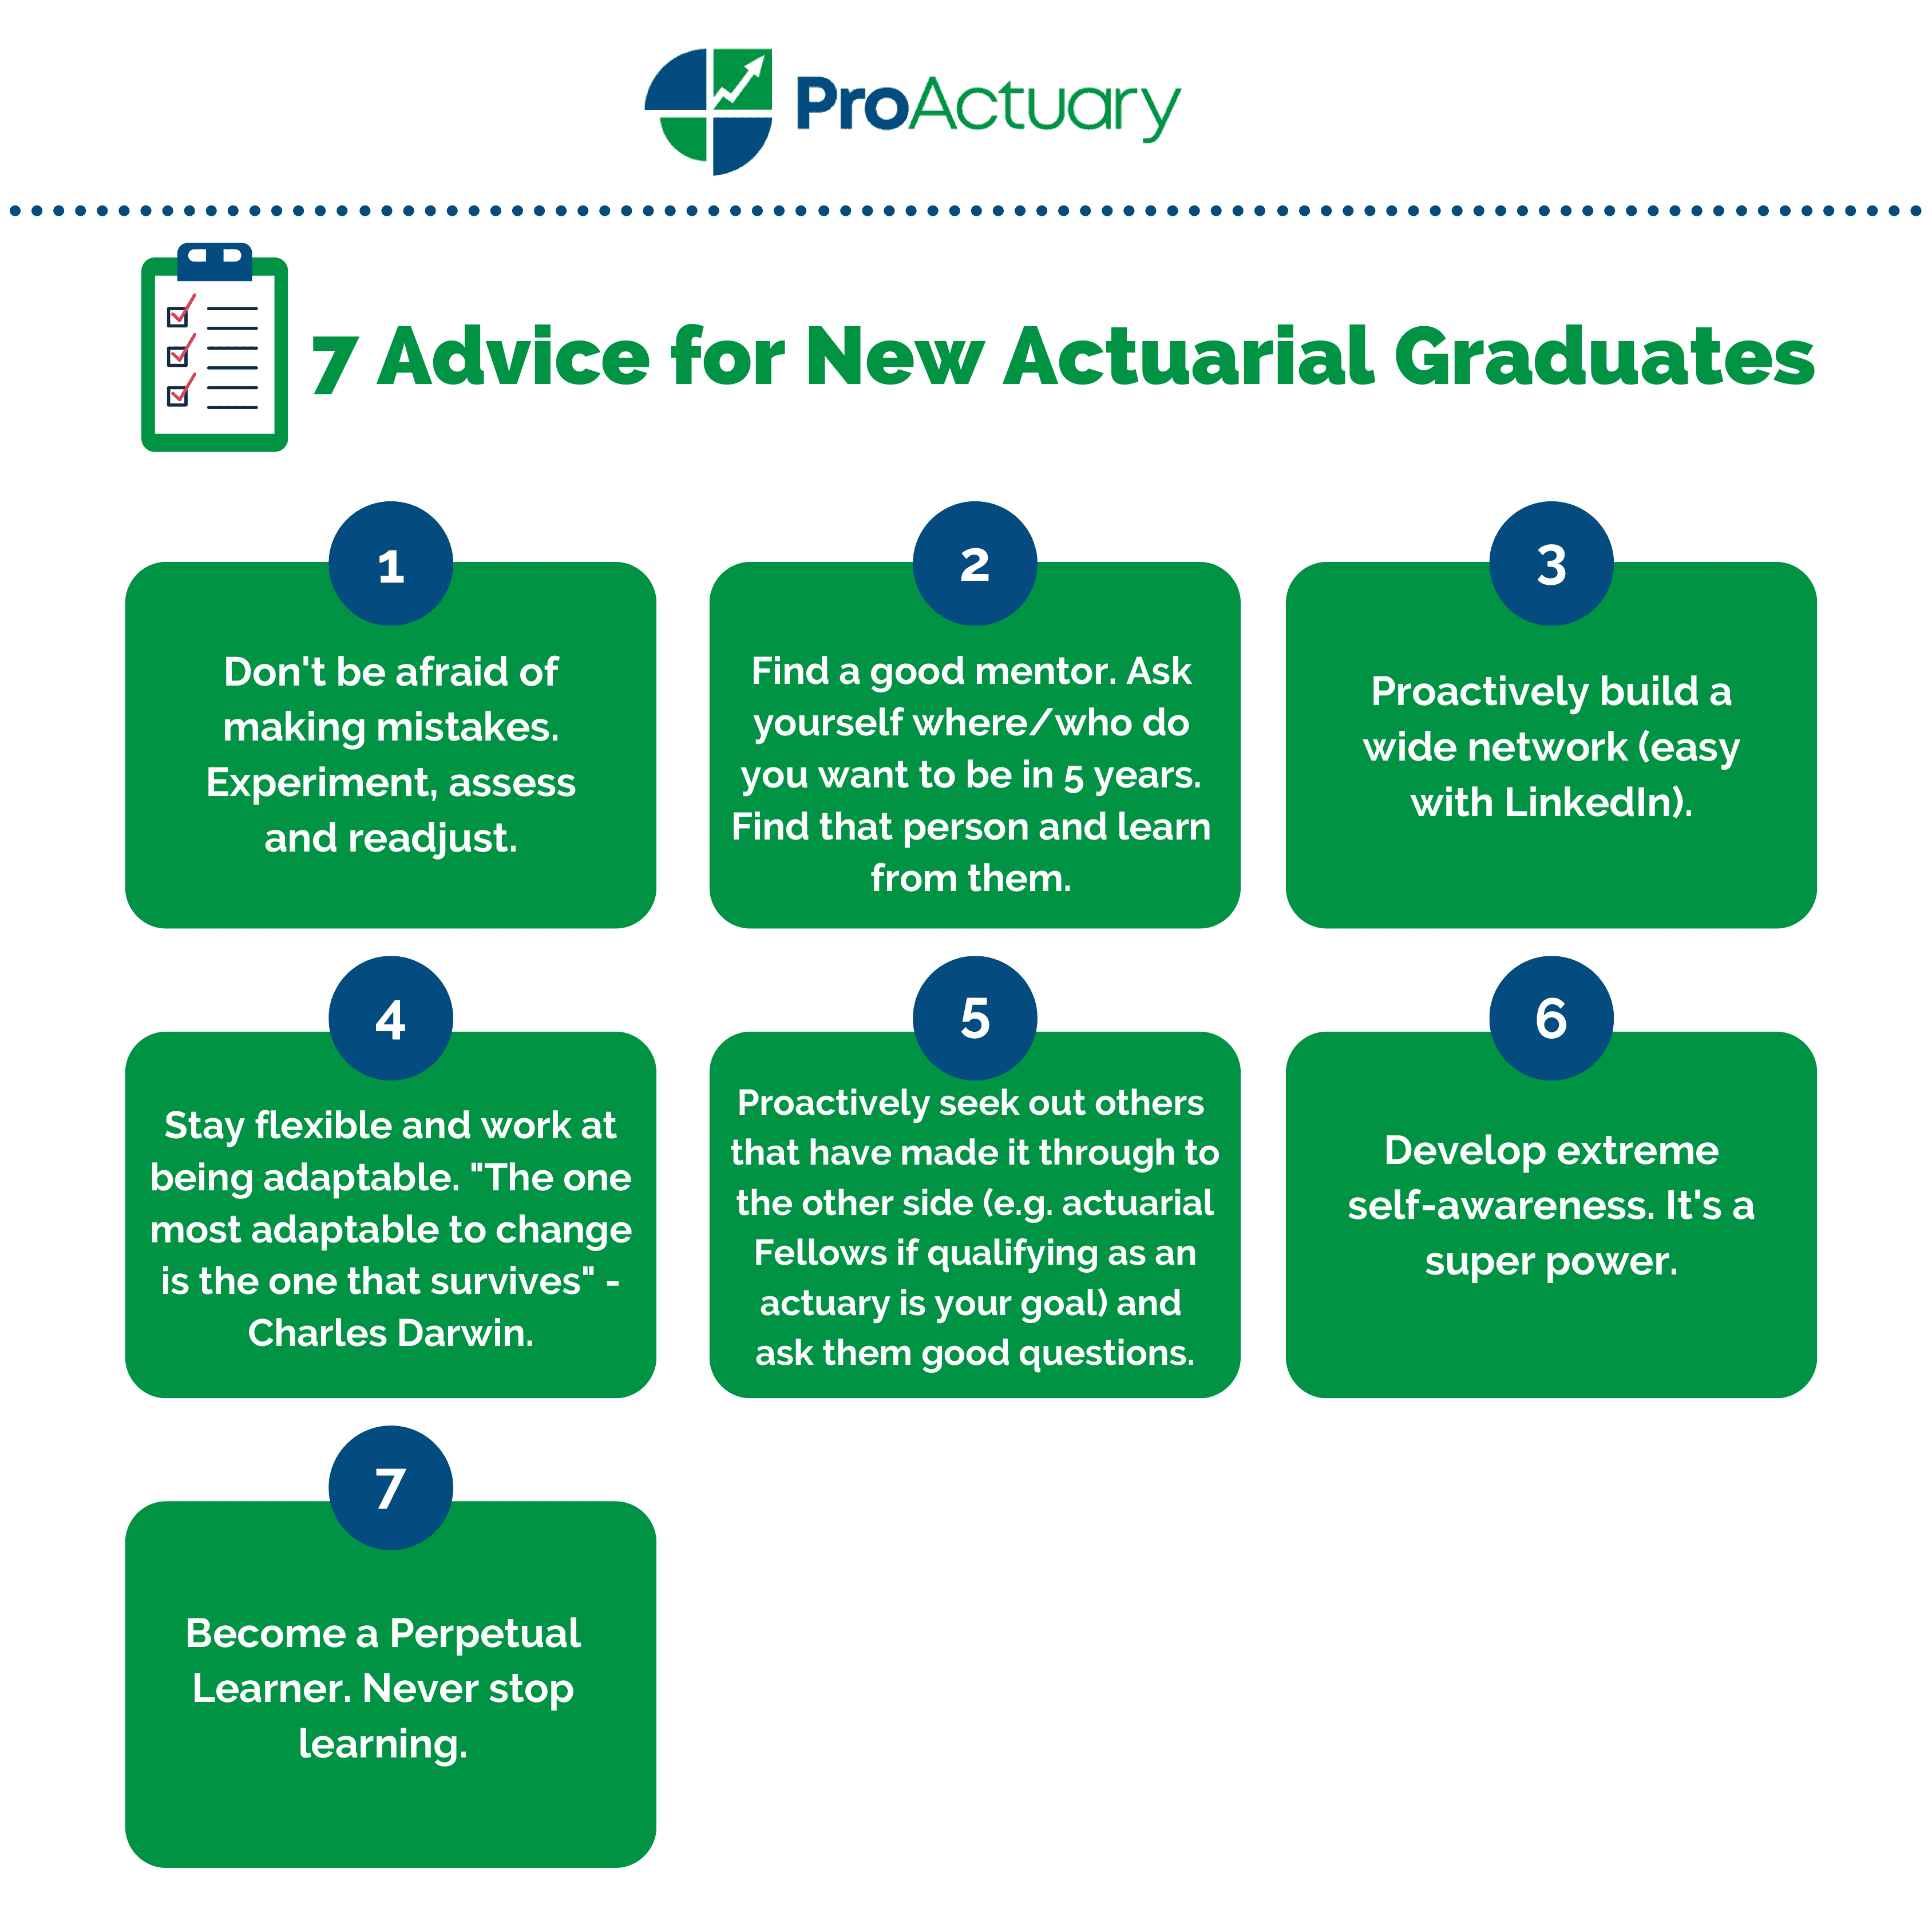 Advice for New Actuarial Graduates